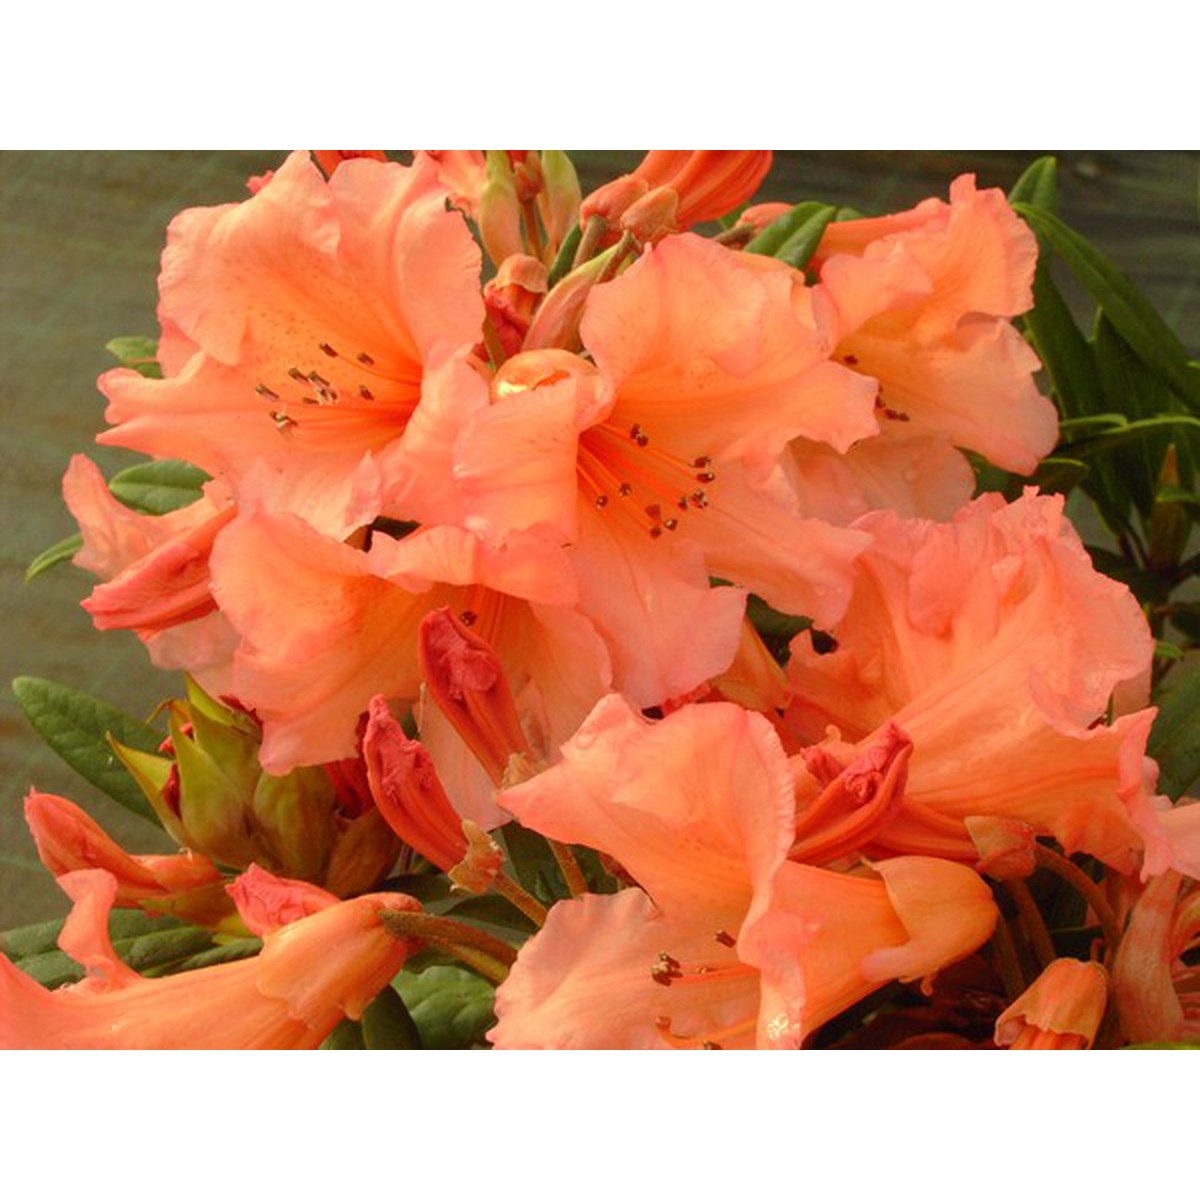   Rhododendron 'Tortoiseshell orange'  